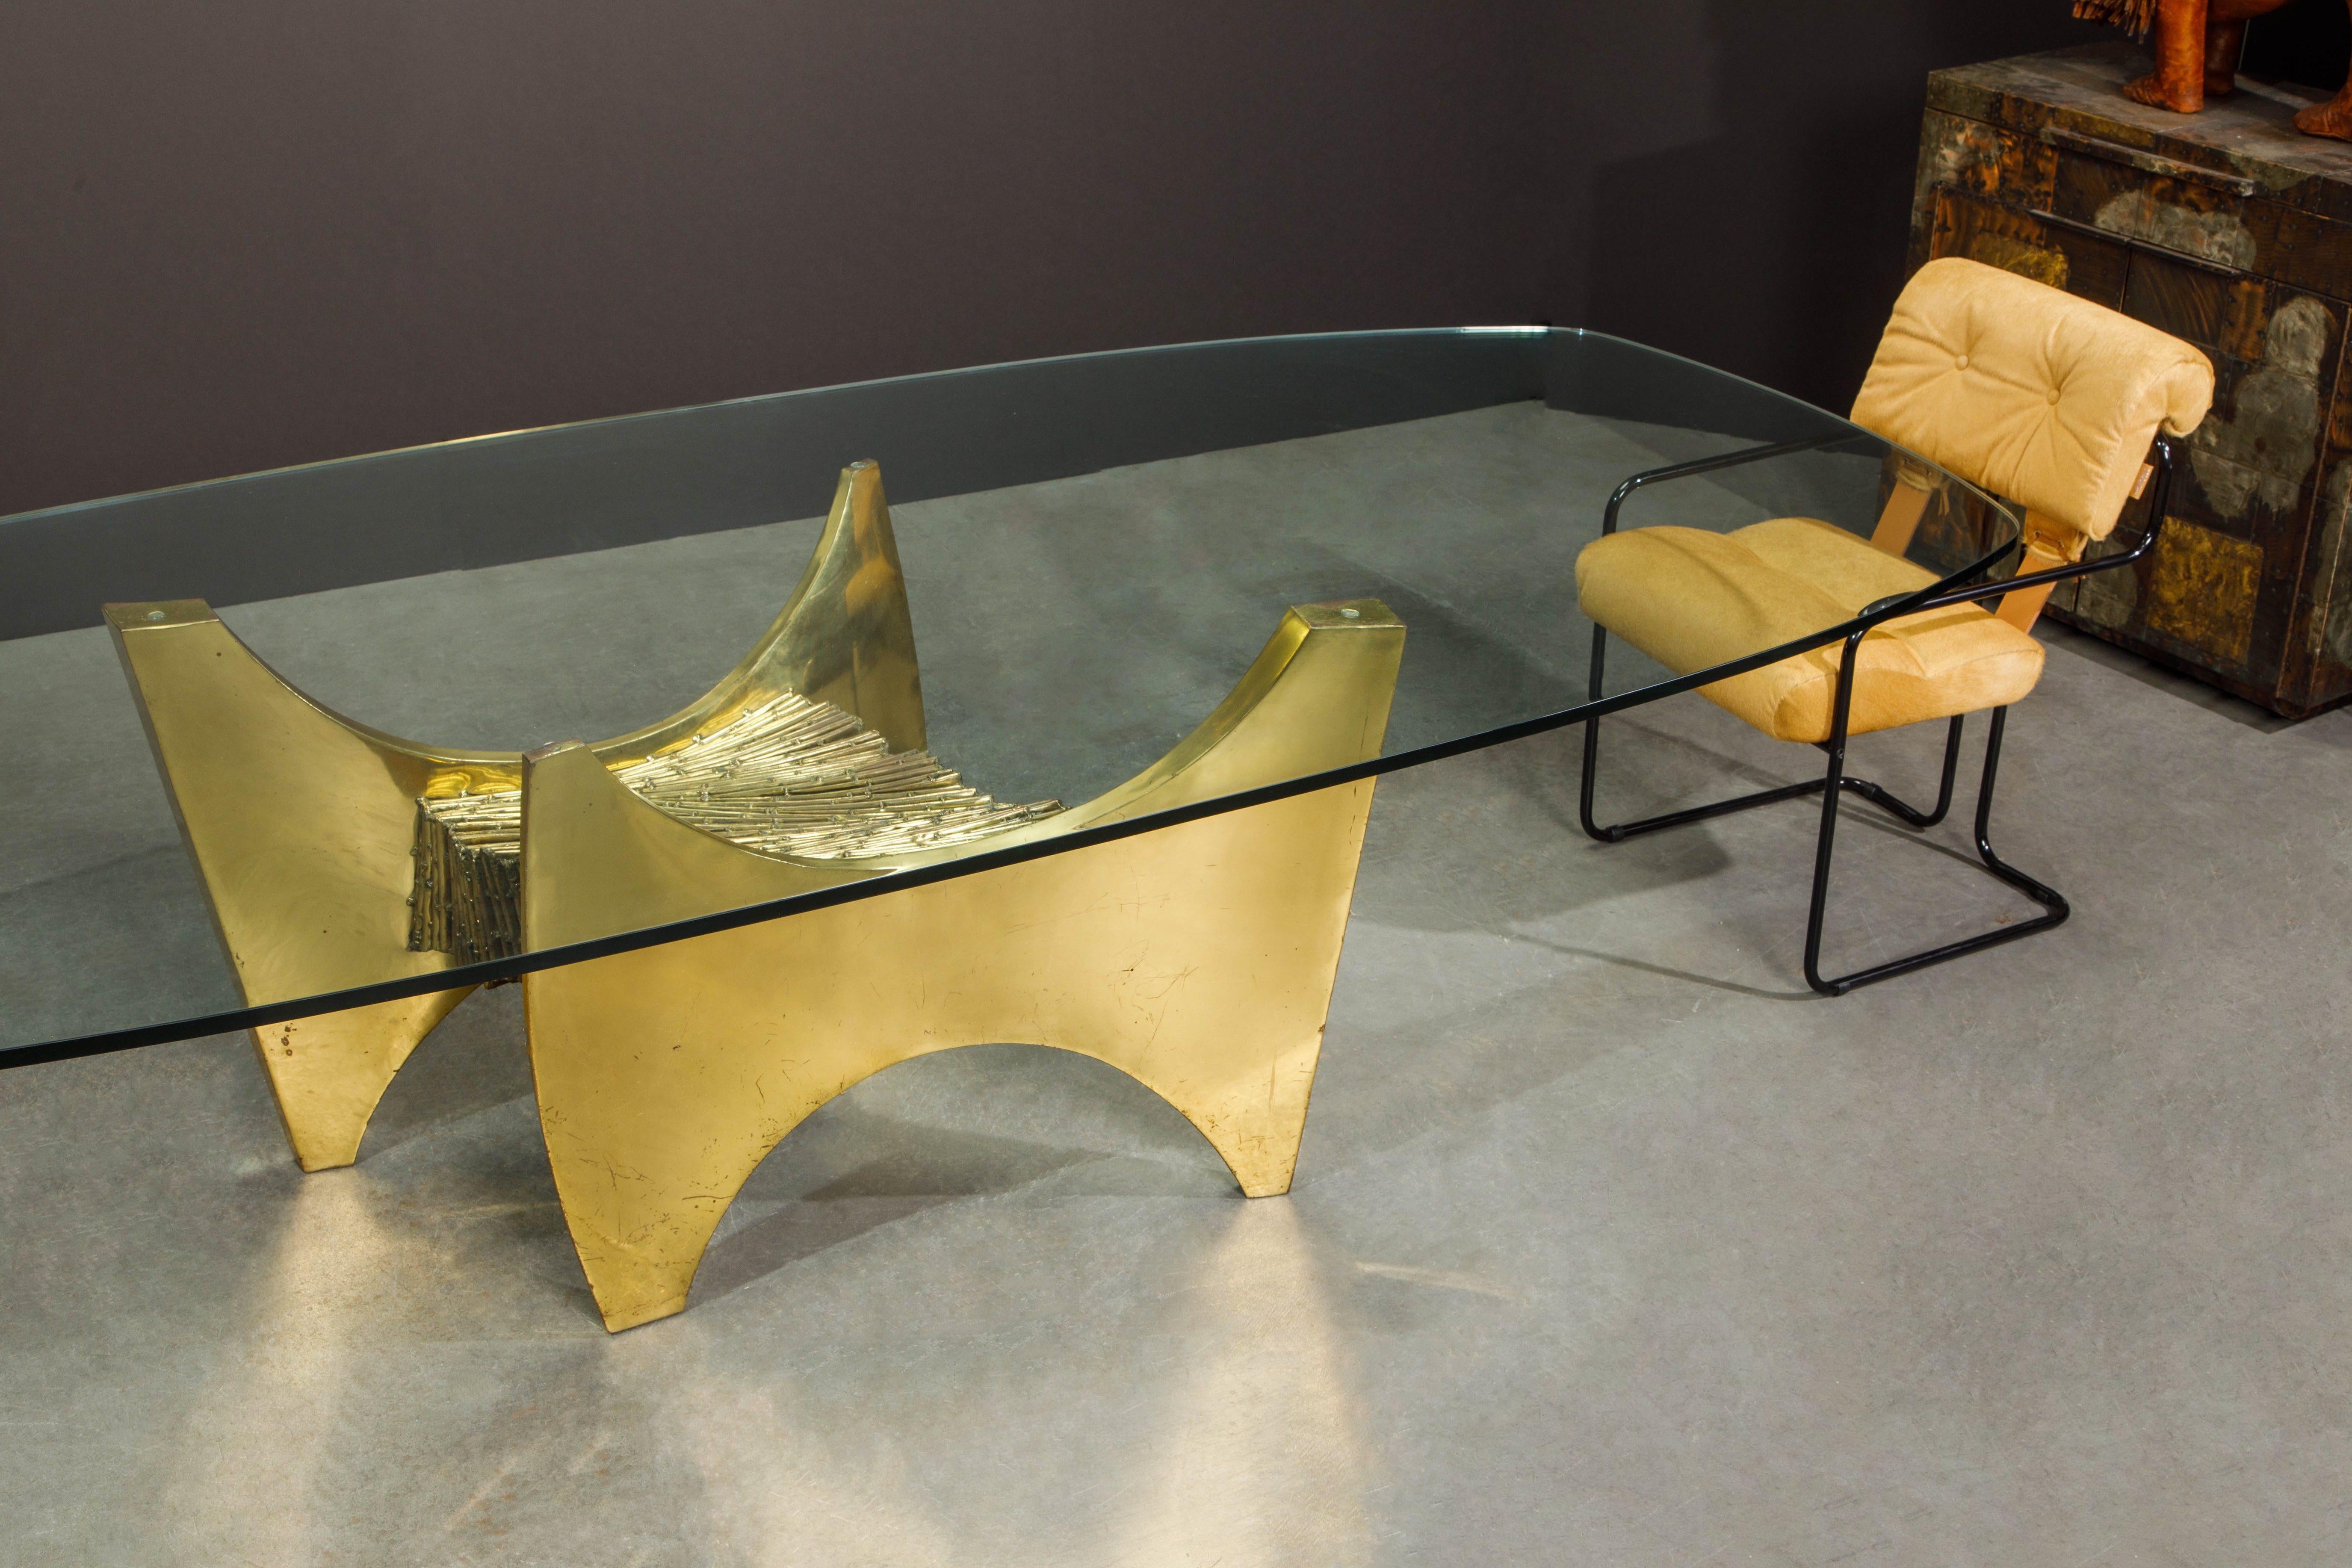 Late 20th Century Claude Santarelli Sculptural Brass Fine Art Dining Table, Paris c. 1975, Signed